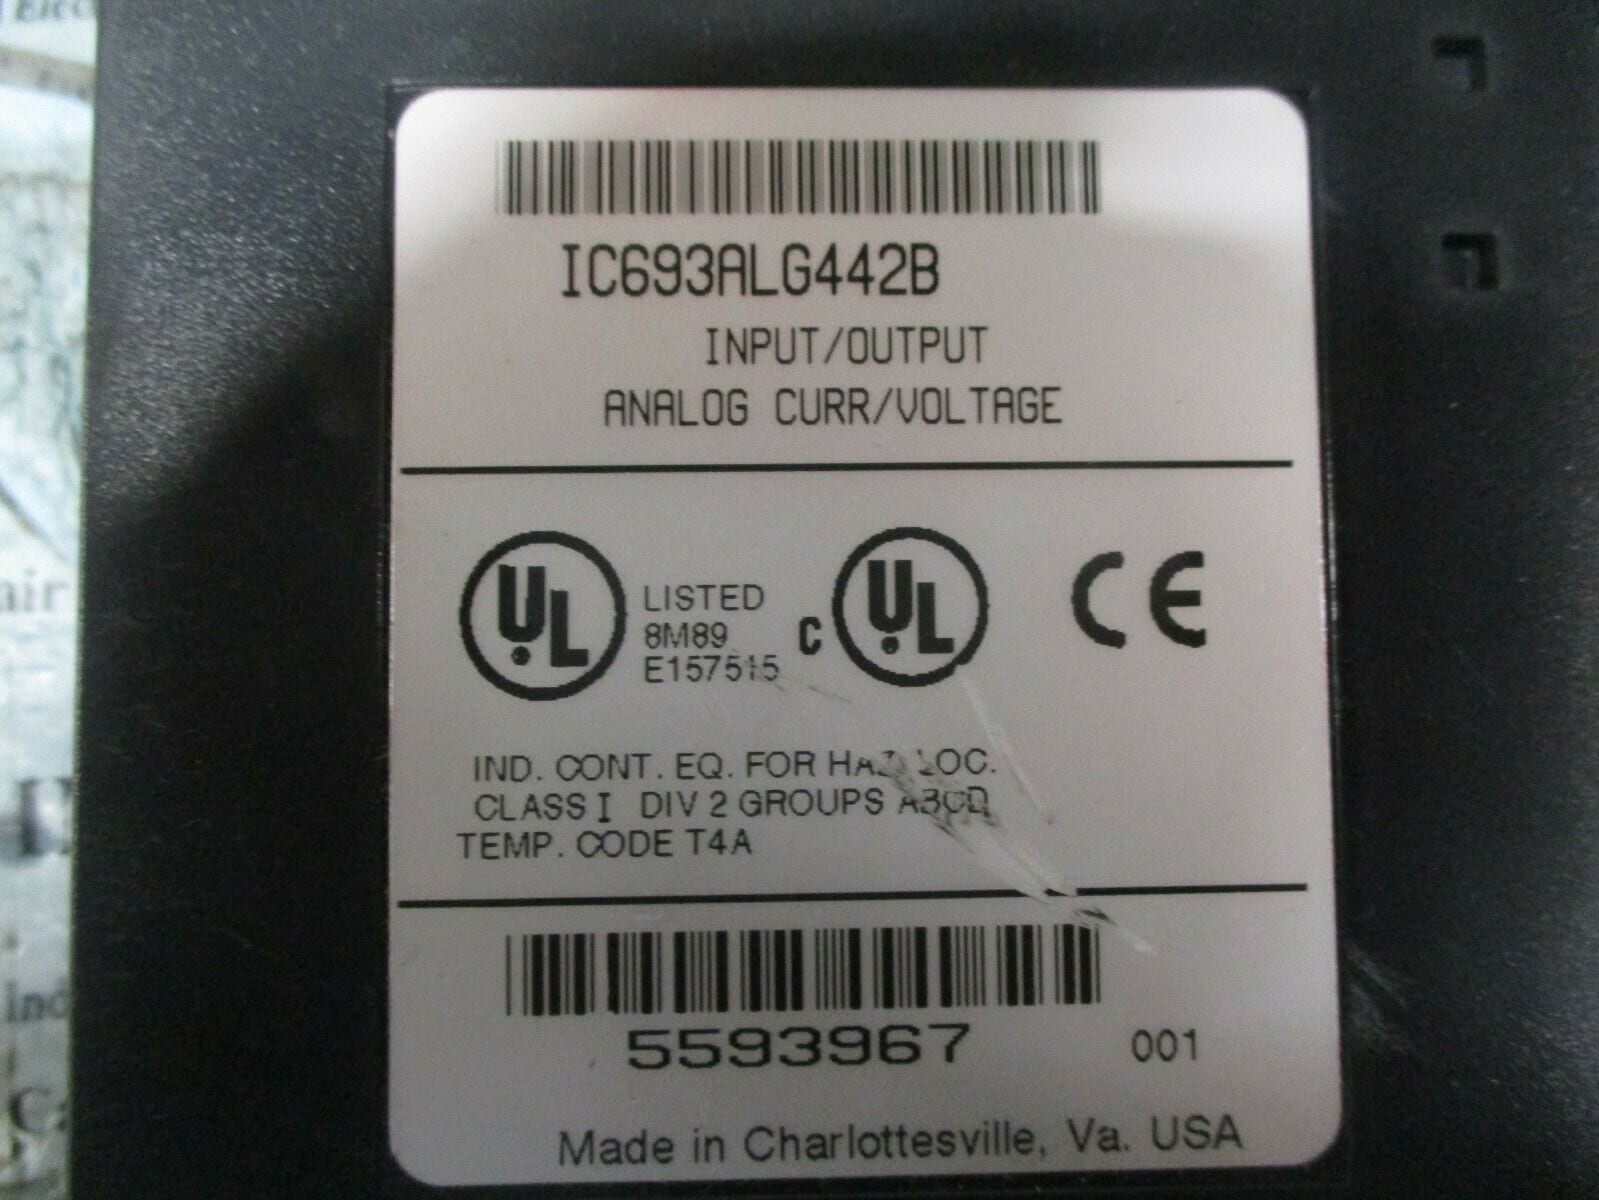 GE FANUC analog input/output current/voltage module 90-30  IC693ALG442B